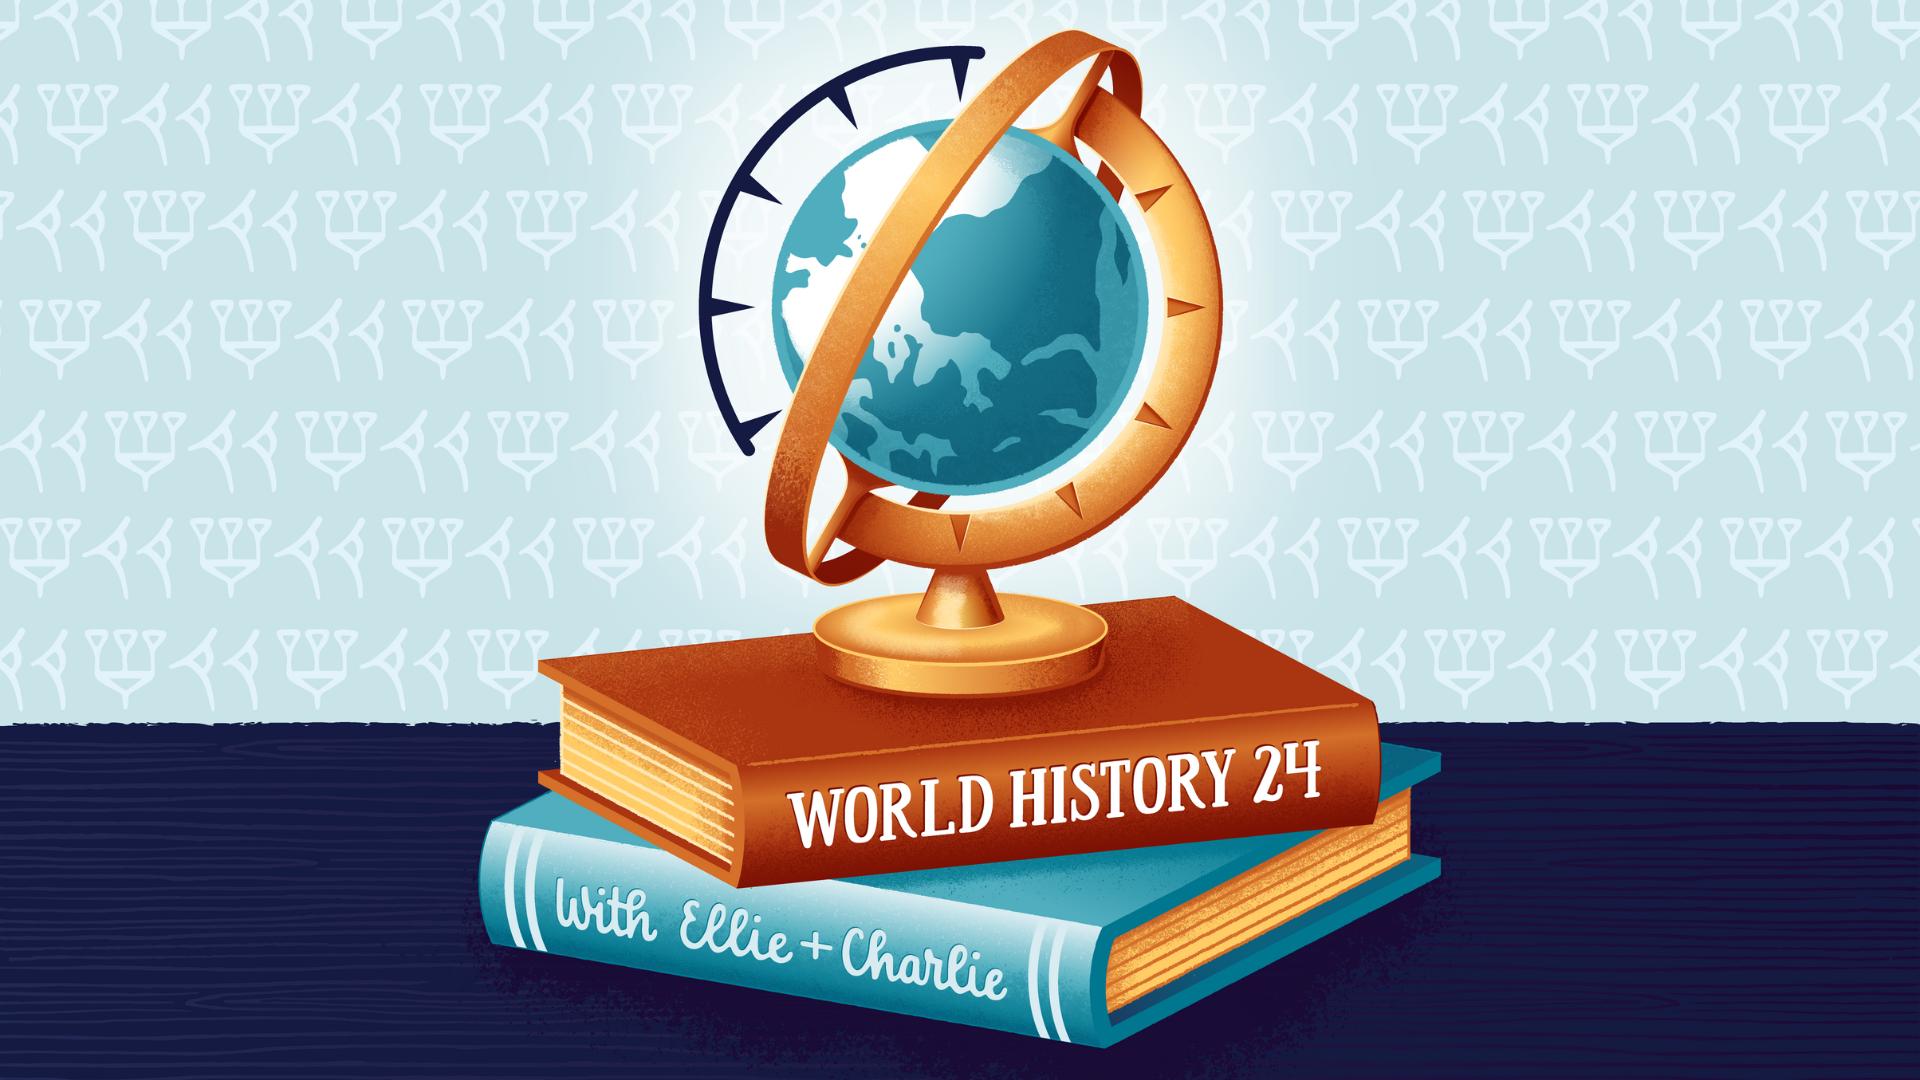 World History 24